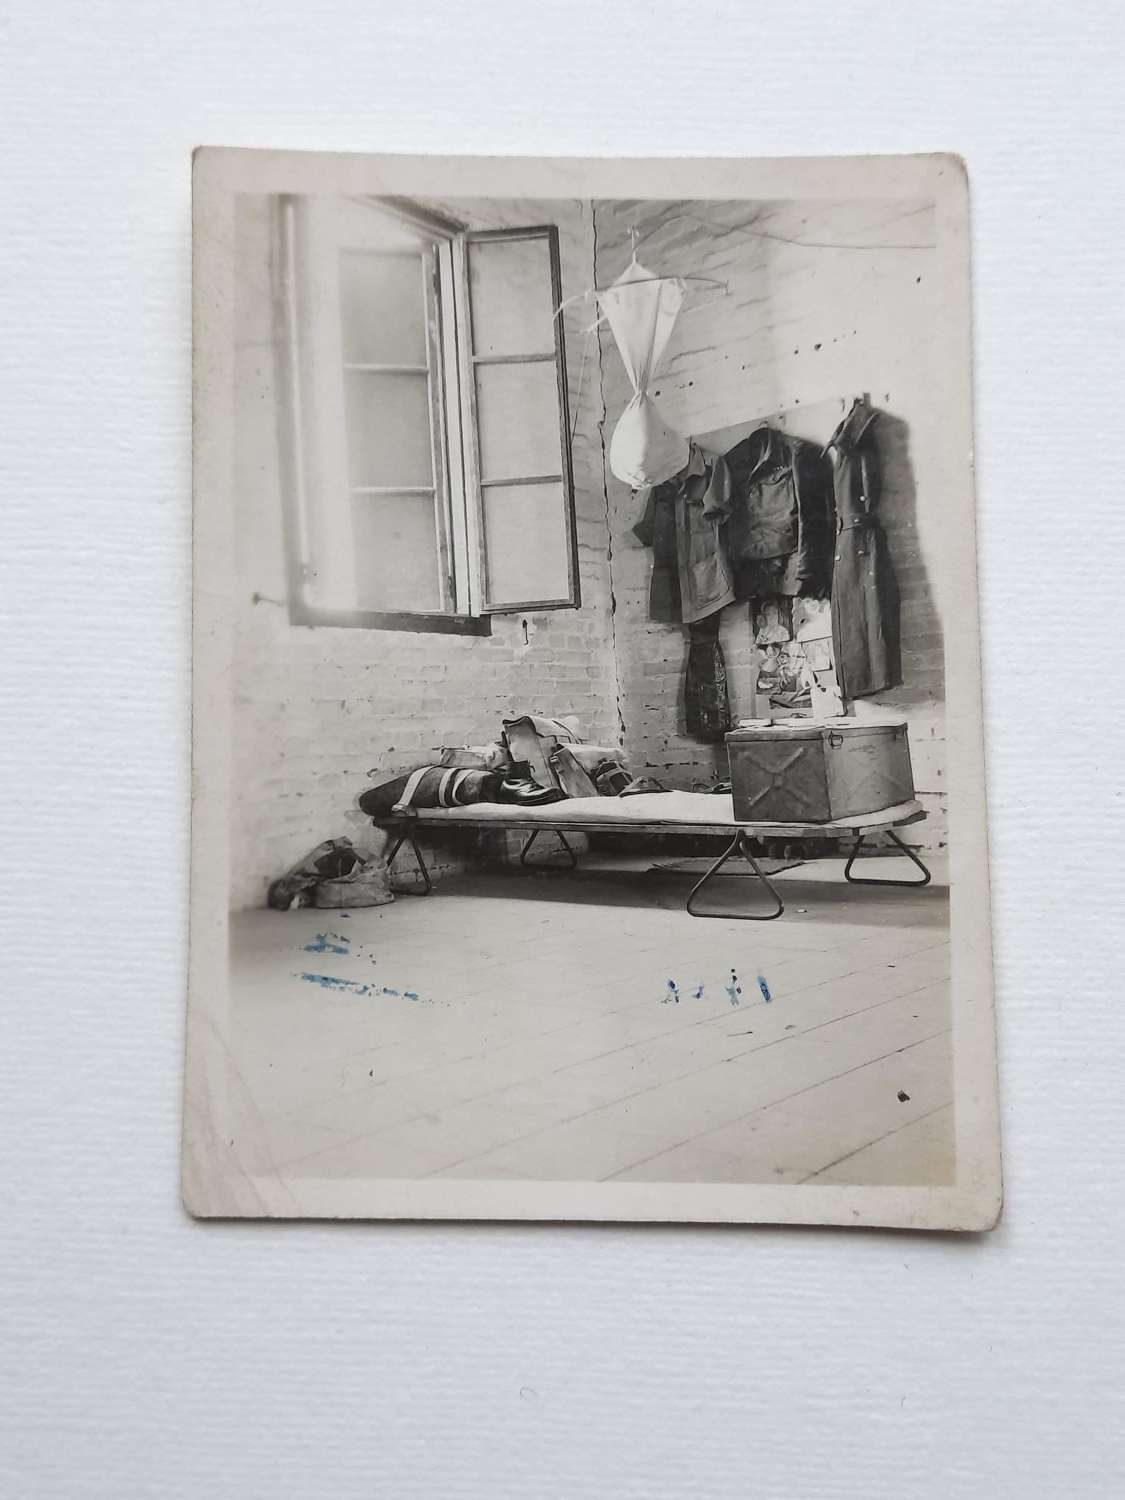 WW2 Photo of a Soldier's Bed at 'El Bullah'